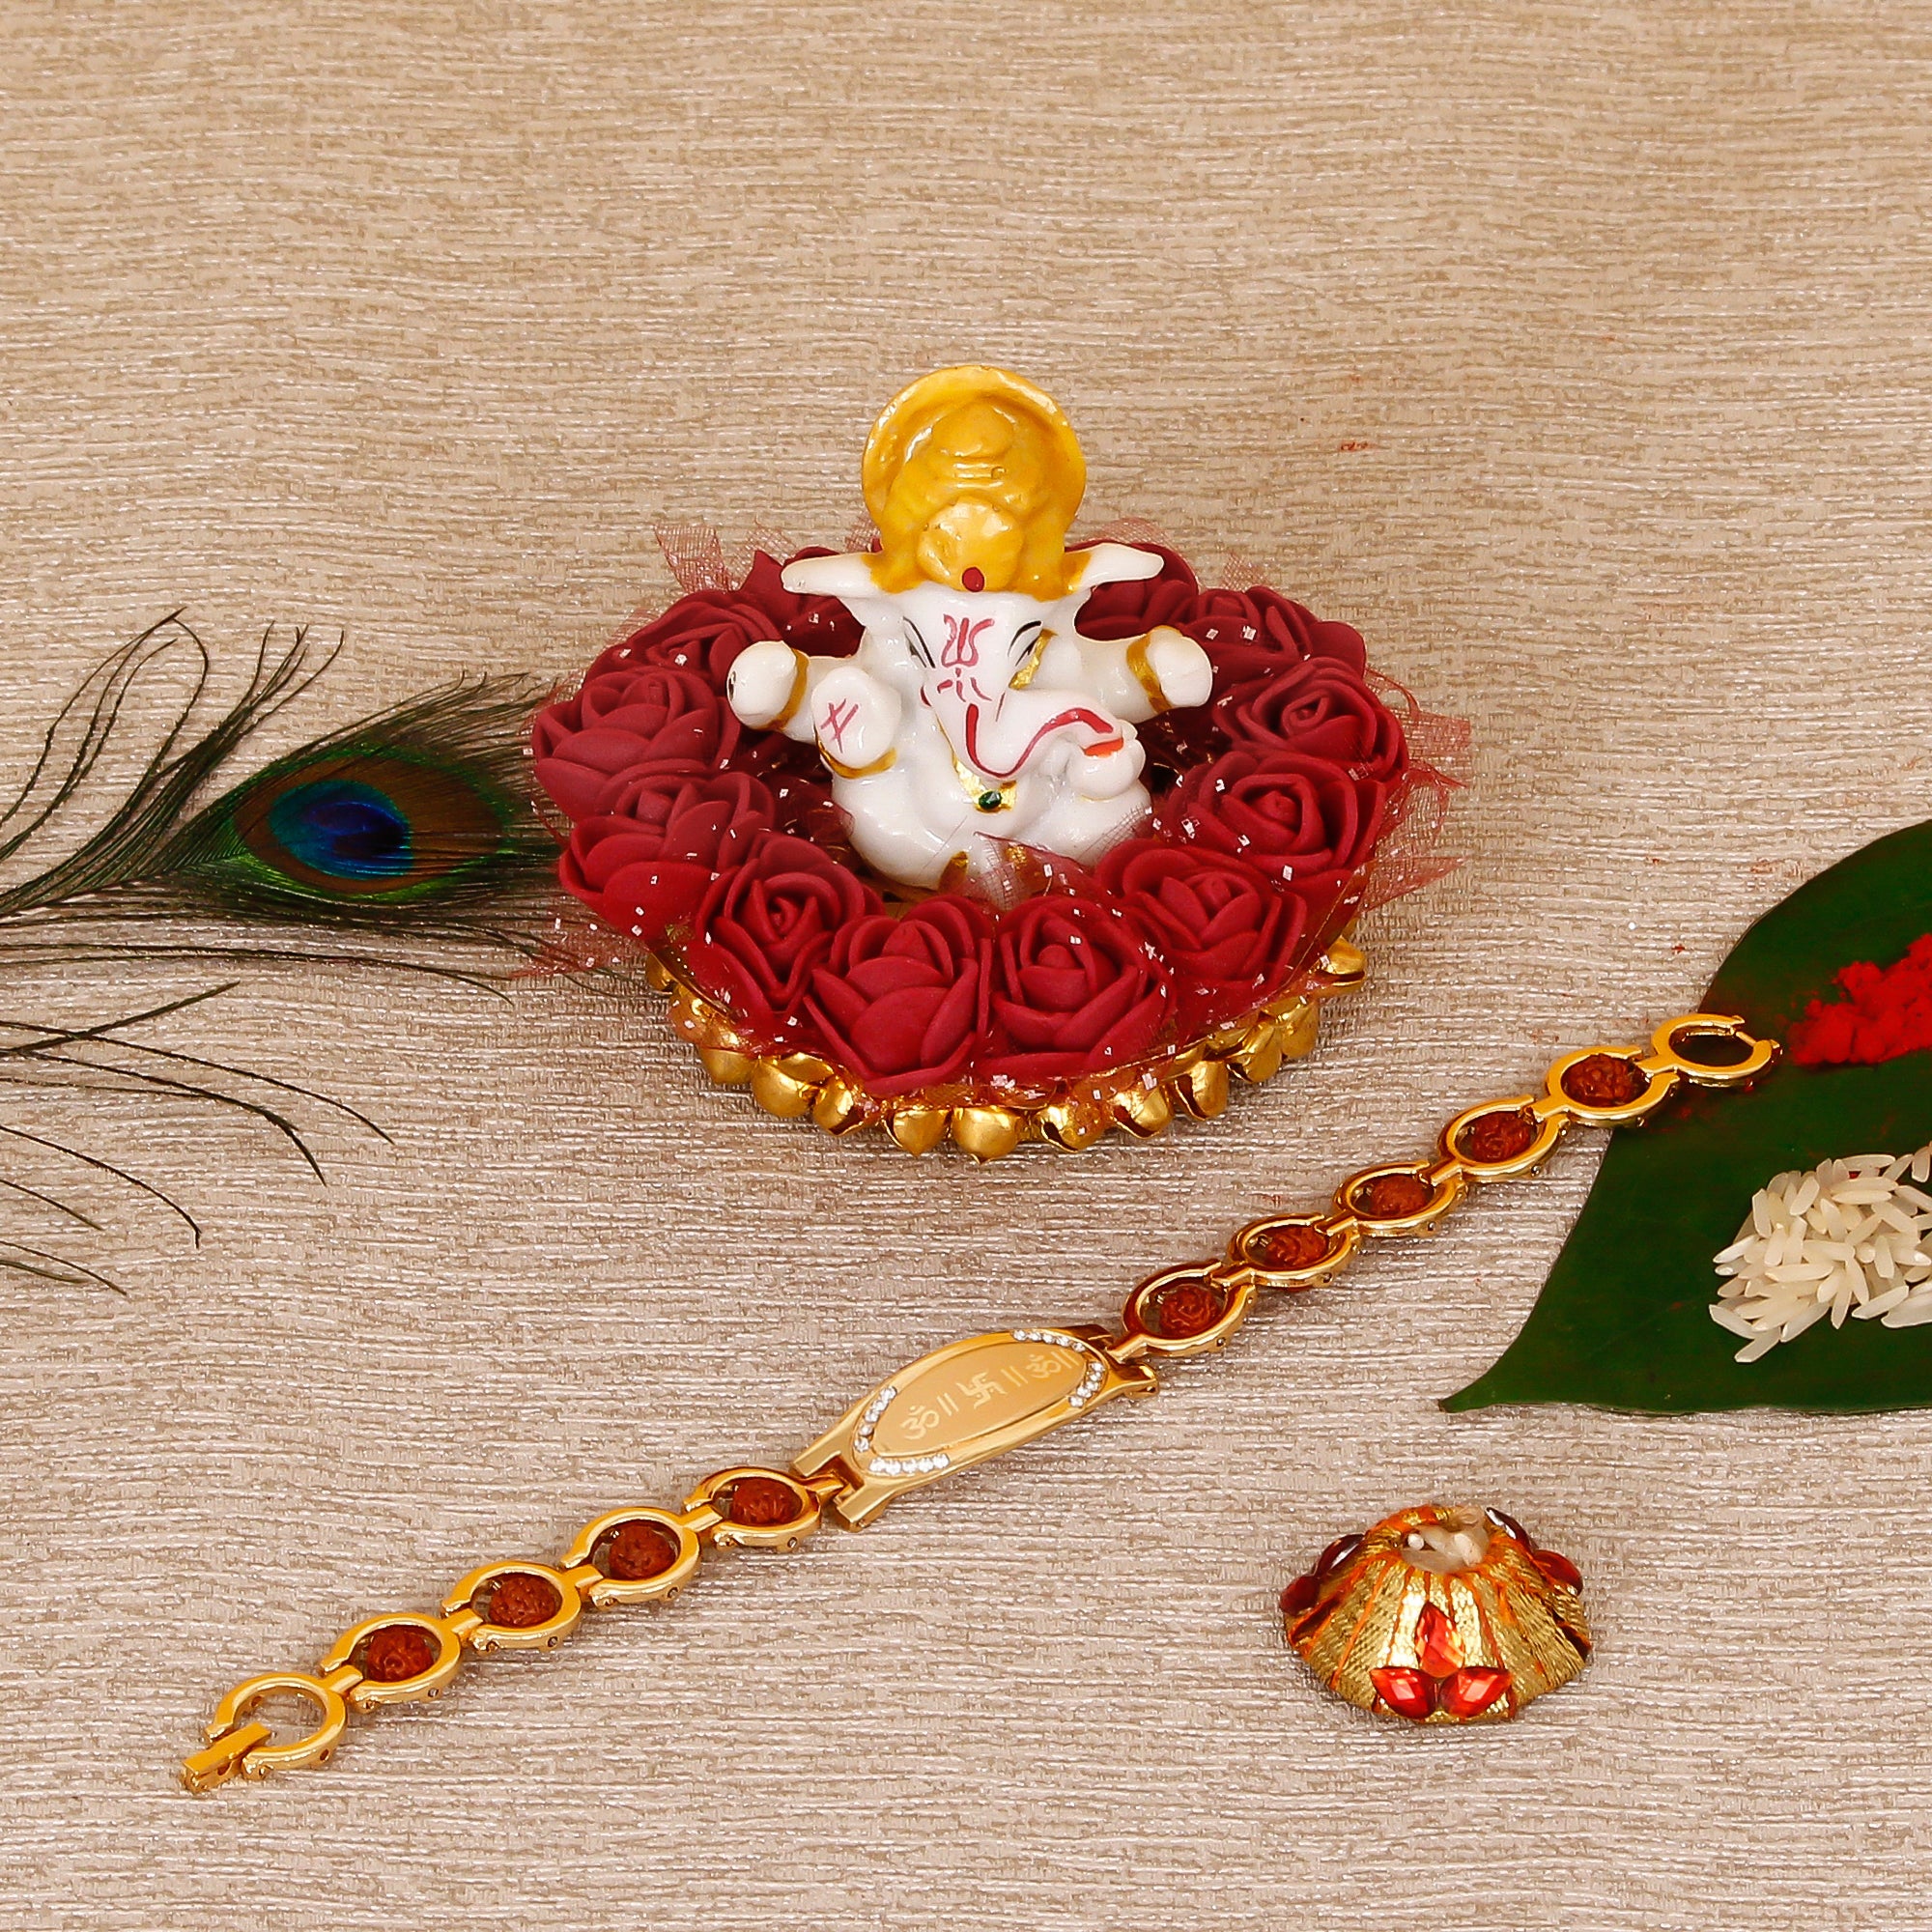 Designer Bracelet Religious Rakhi with Lord Ganesha Idol on Decorative Plate for Car & Home and Roli Tikka Matki